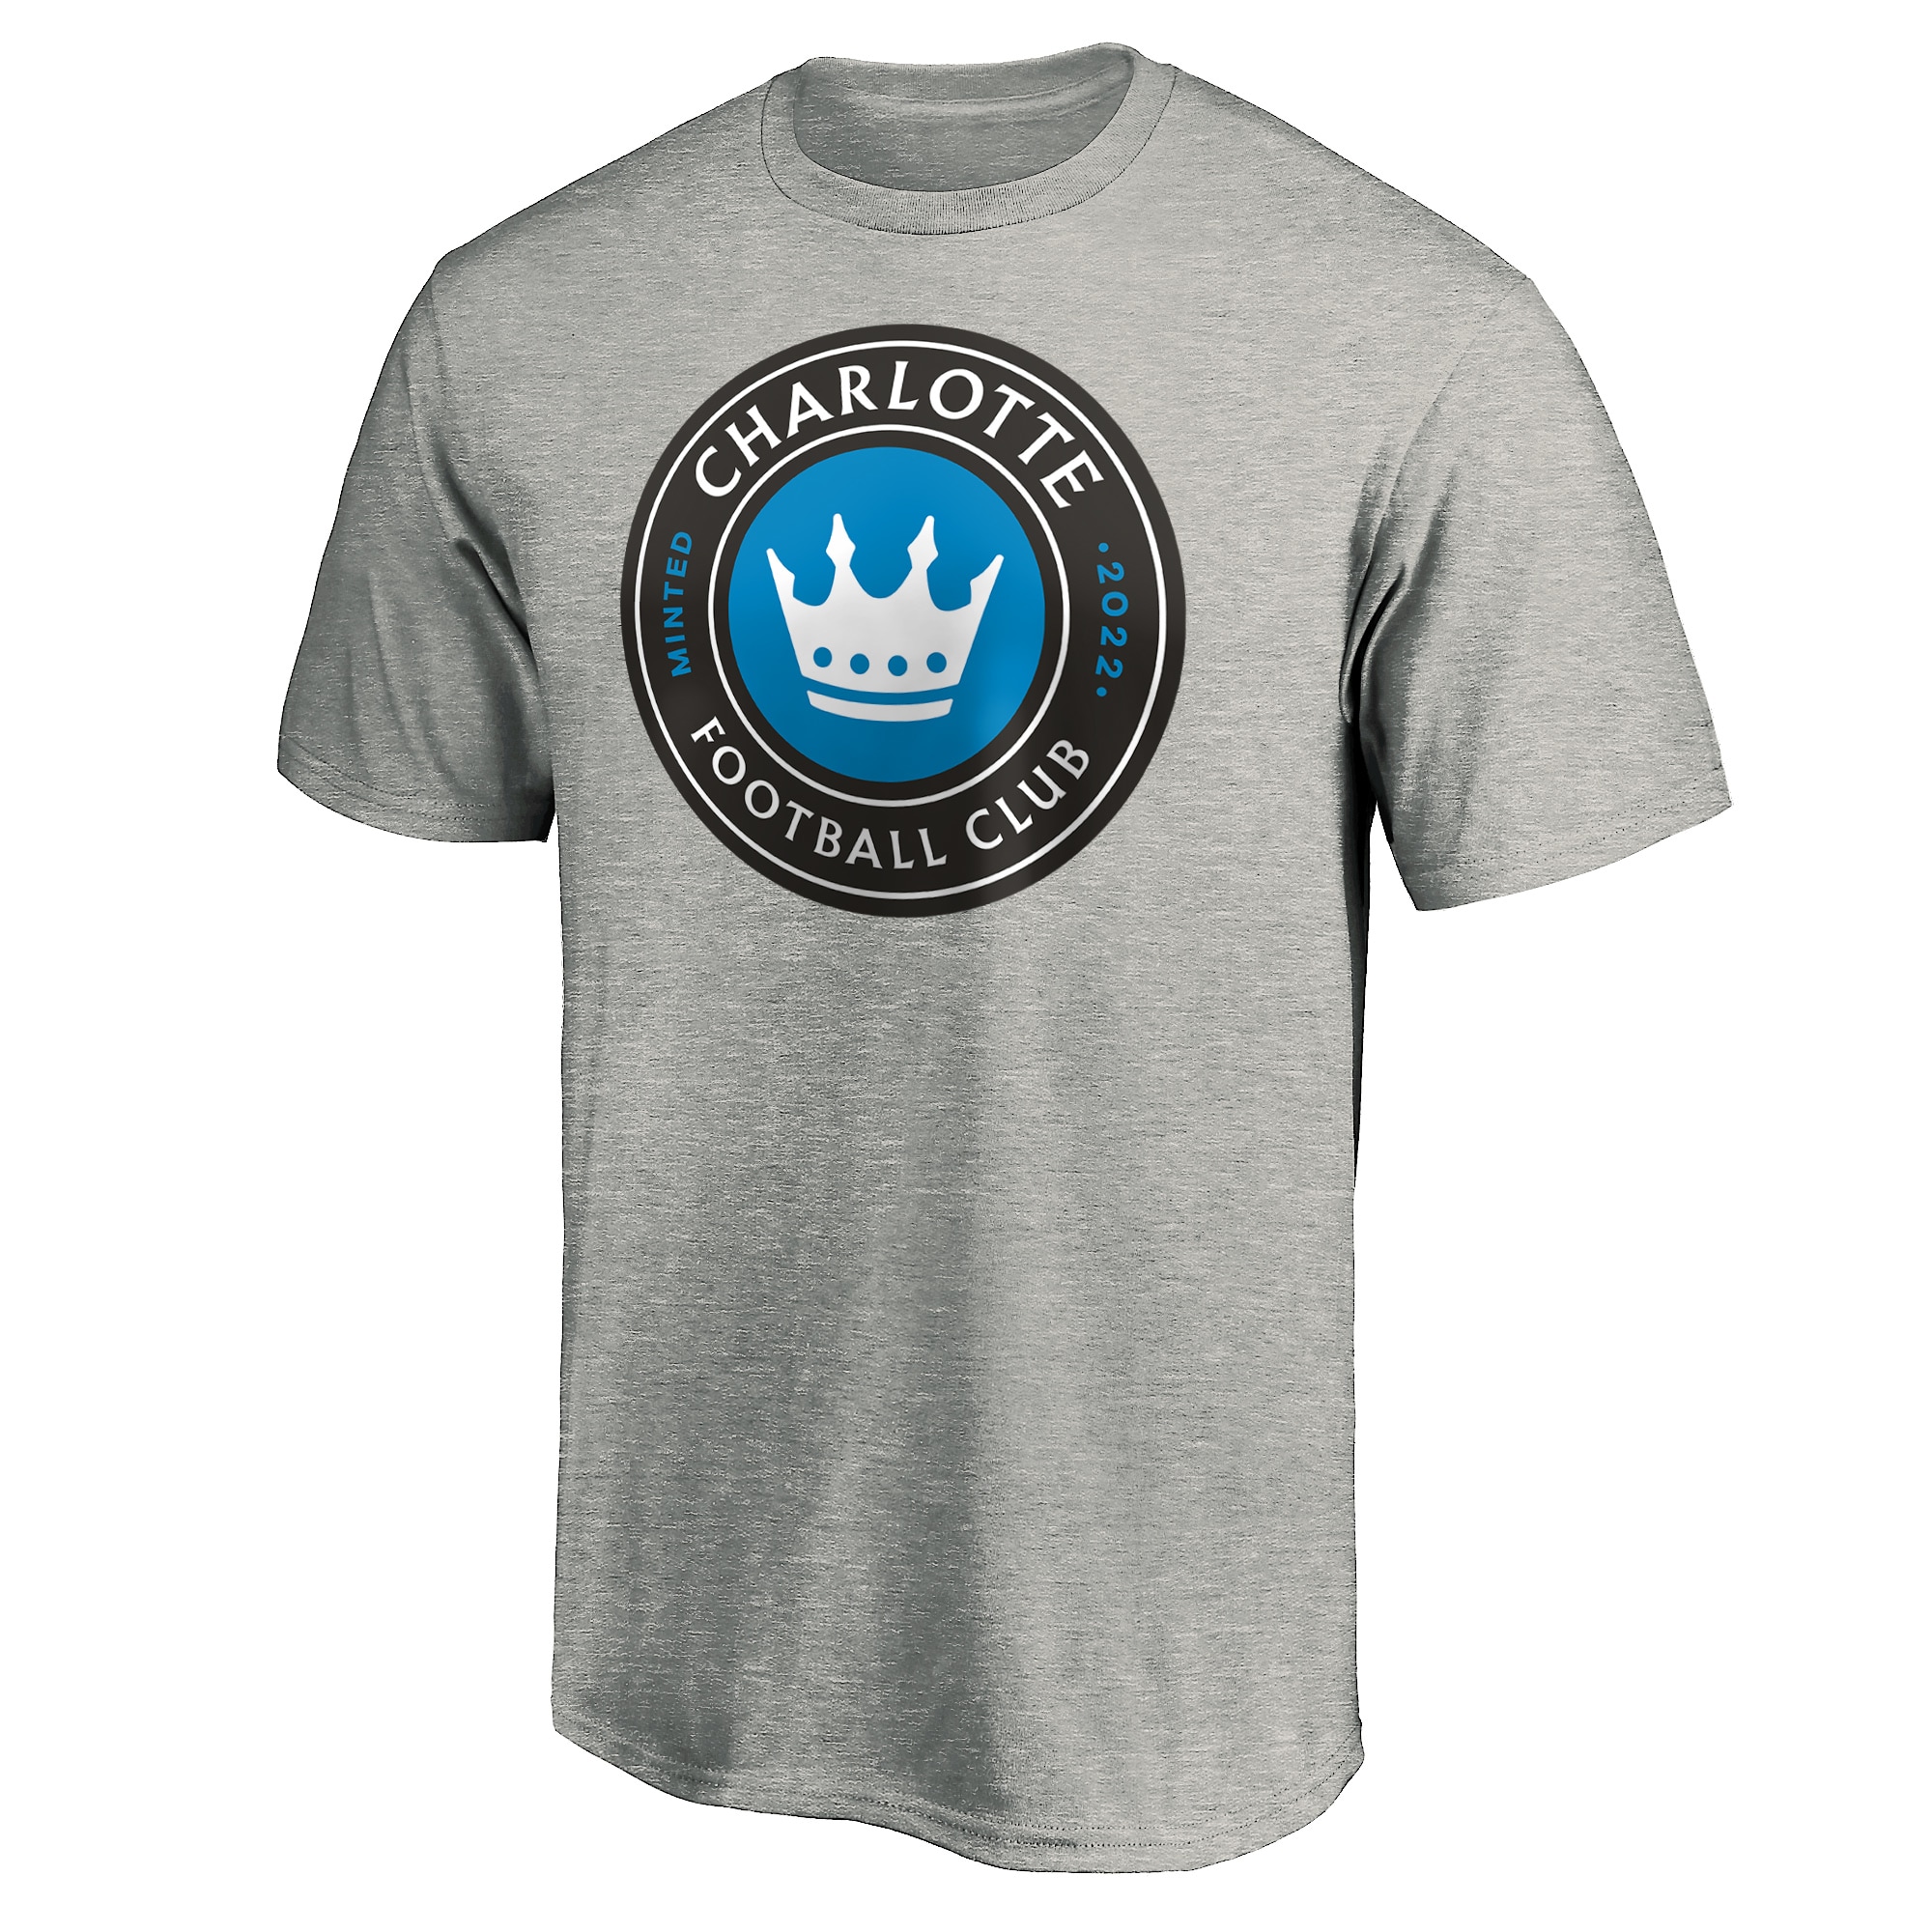 Men's Fanatics Branded Heathered Gray Charlotte FC Primary Logo Team T-Shirt - image 2 of 3